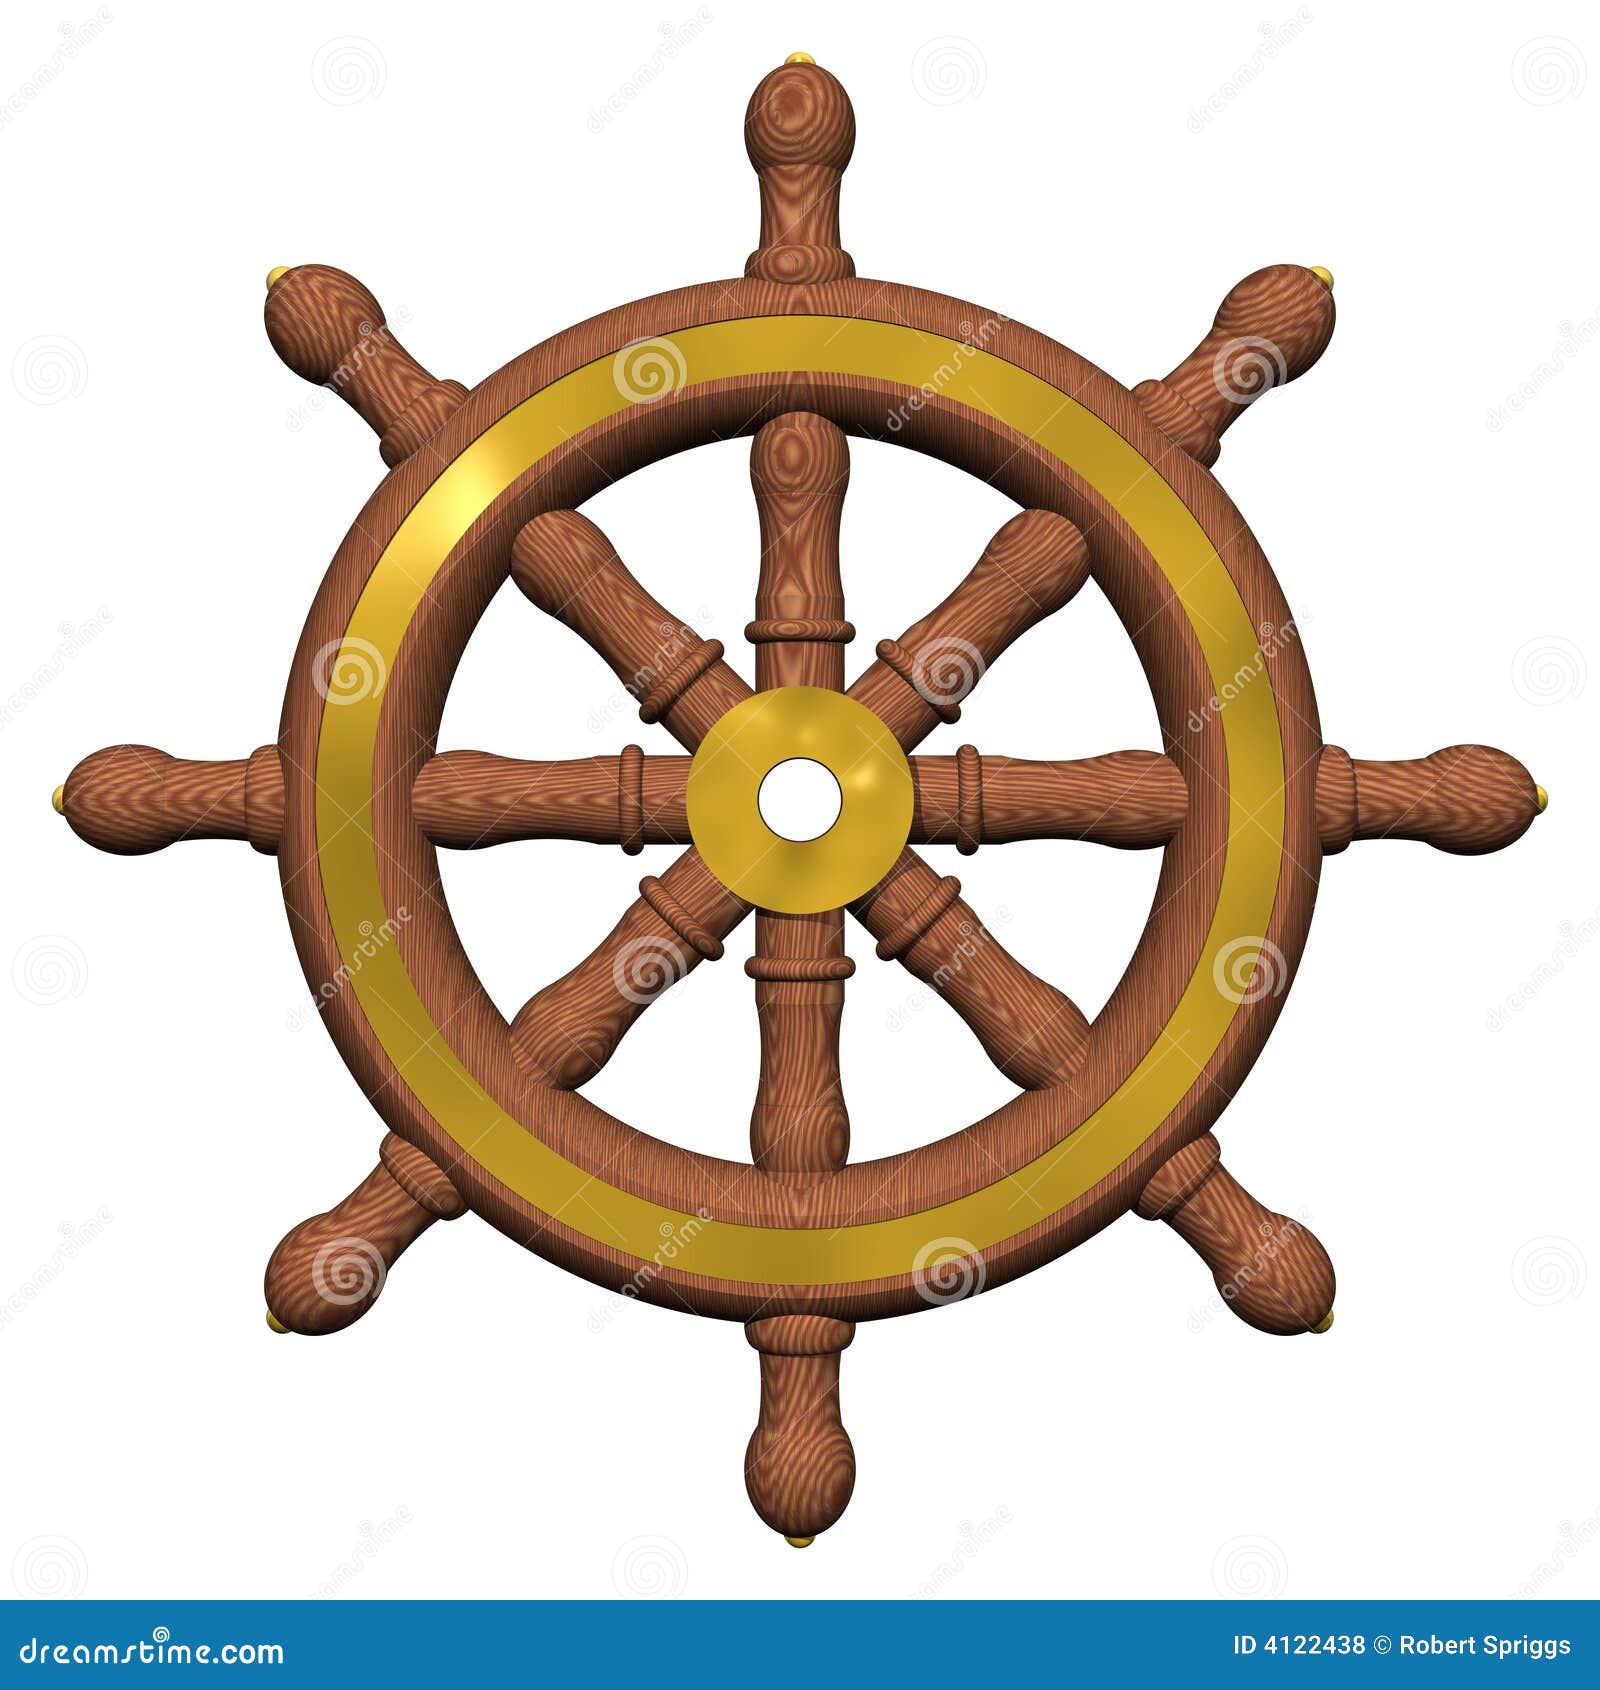 clipart ship steering wheel - photo #37